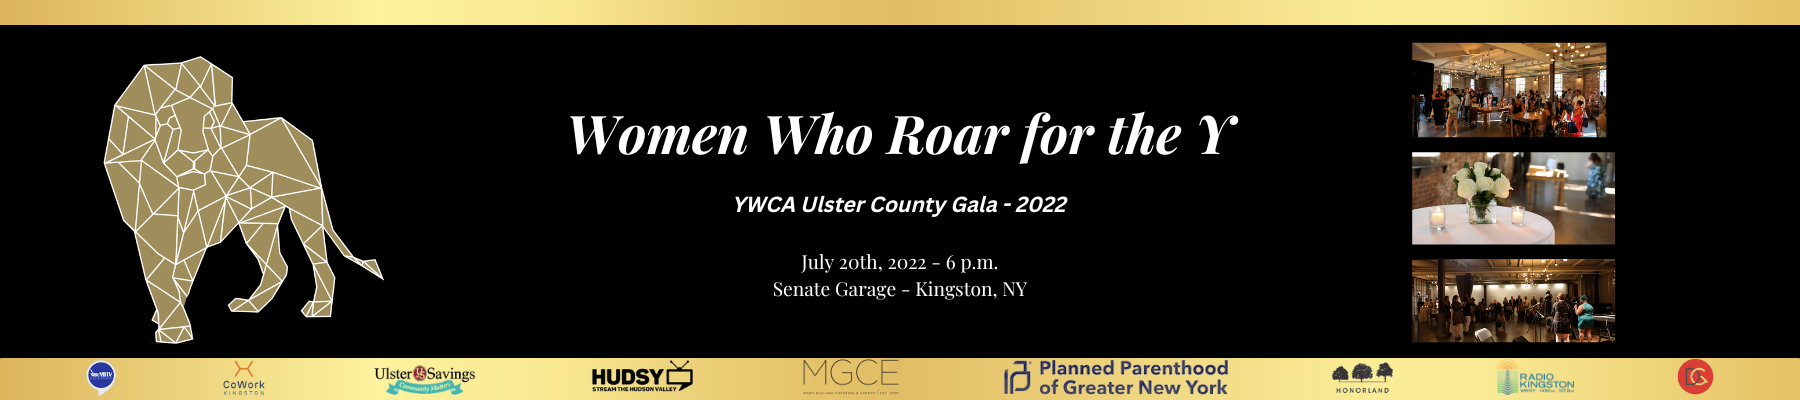 Women Who Roar For The Y Banner — Kingston, NY — YWCA Ulster County